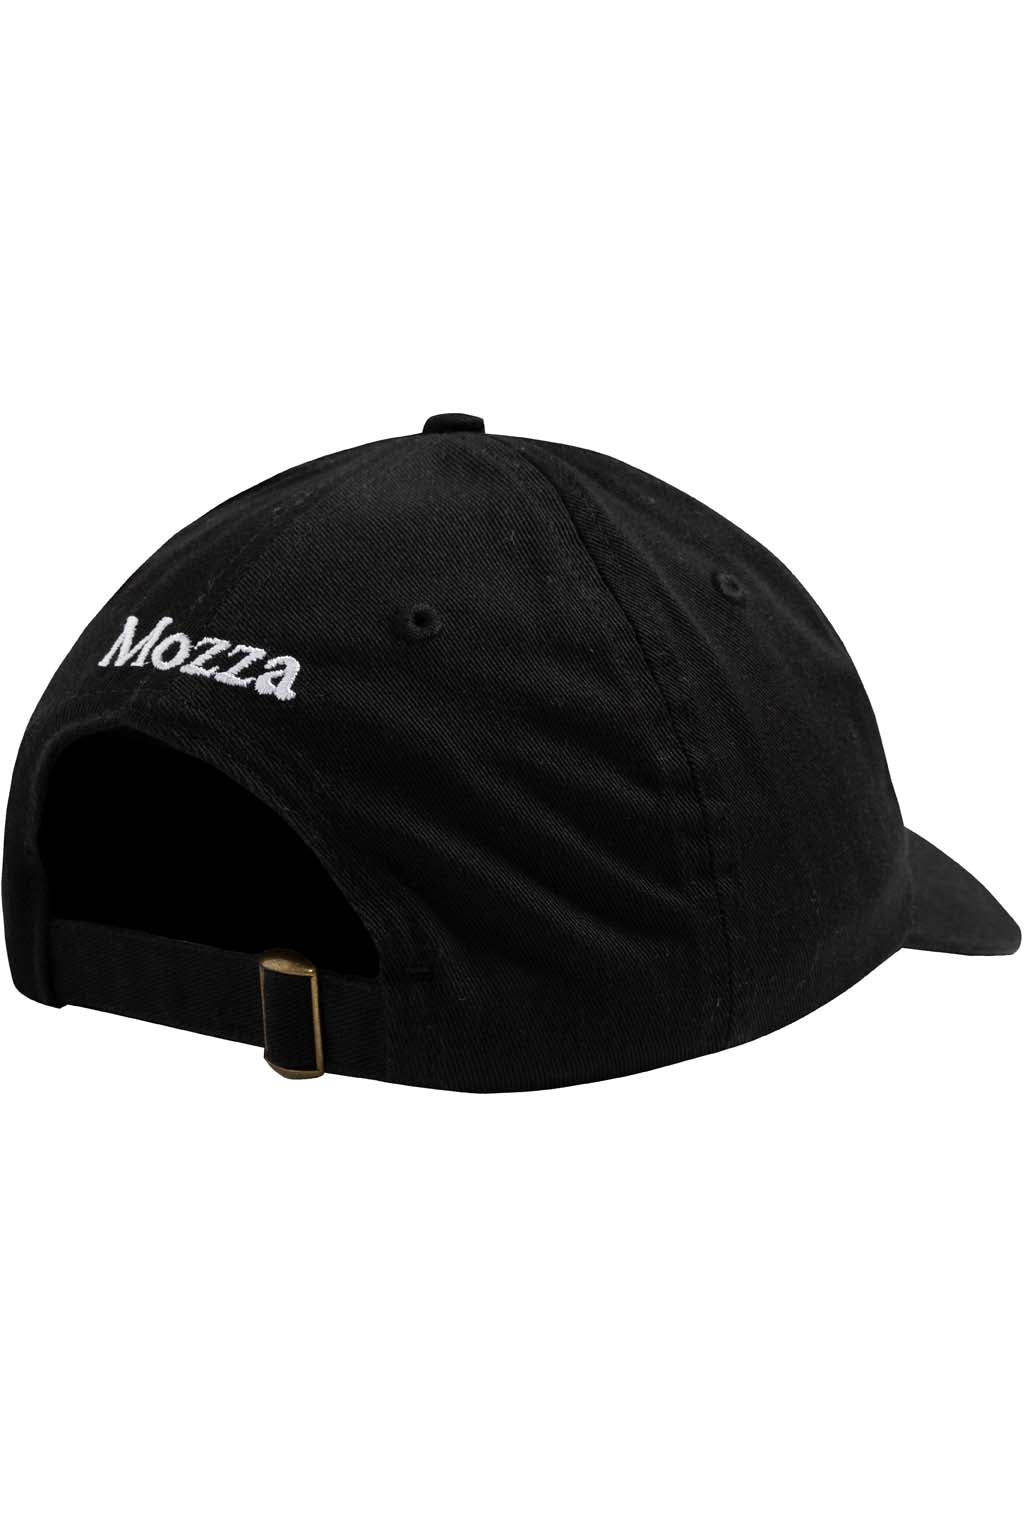 Mozza Dad Hat